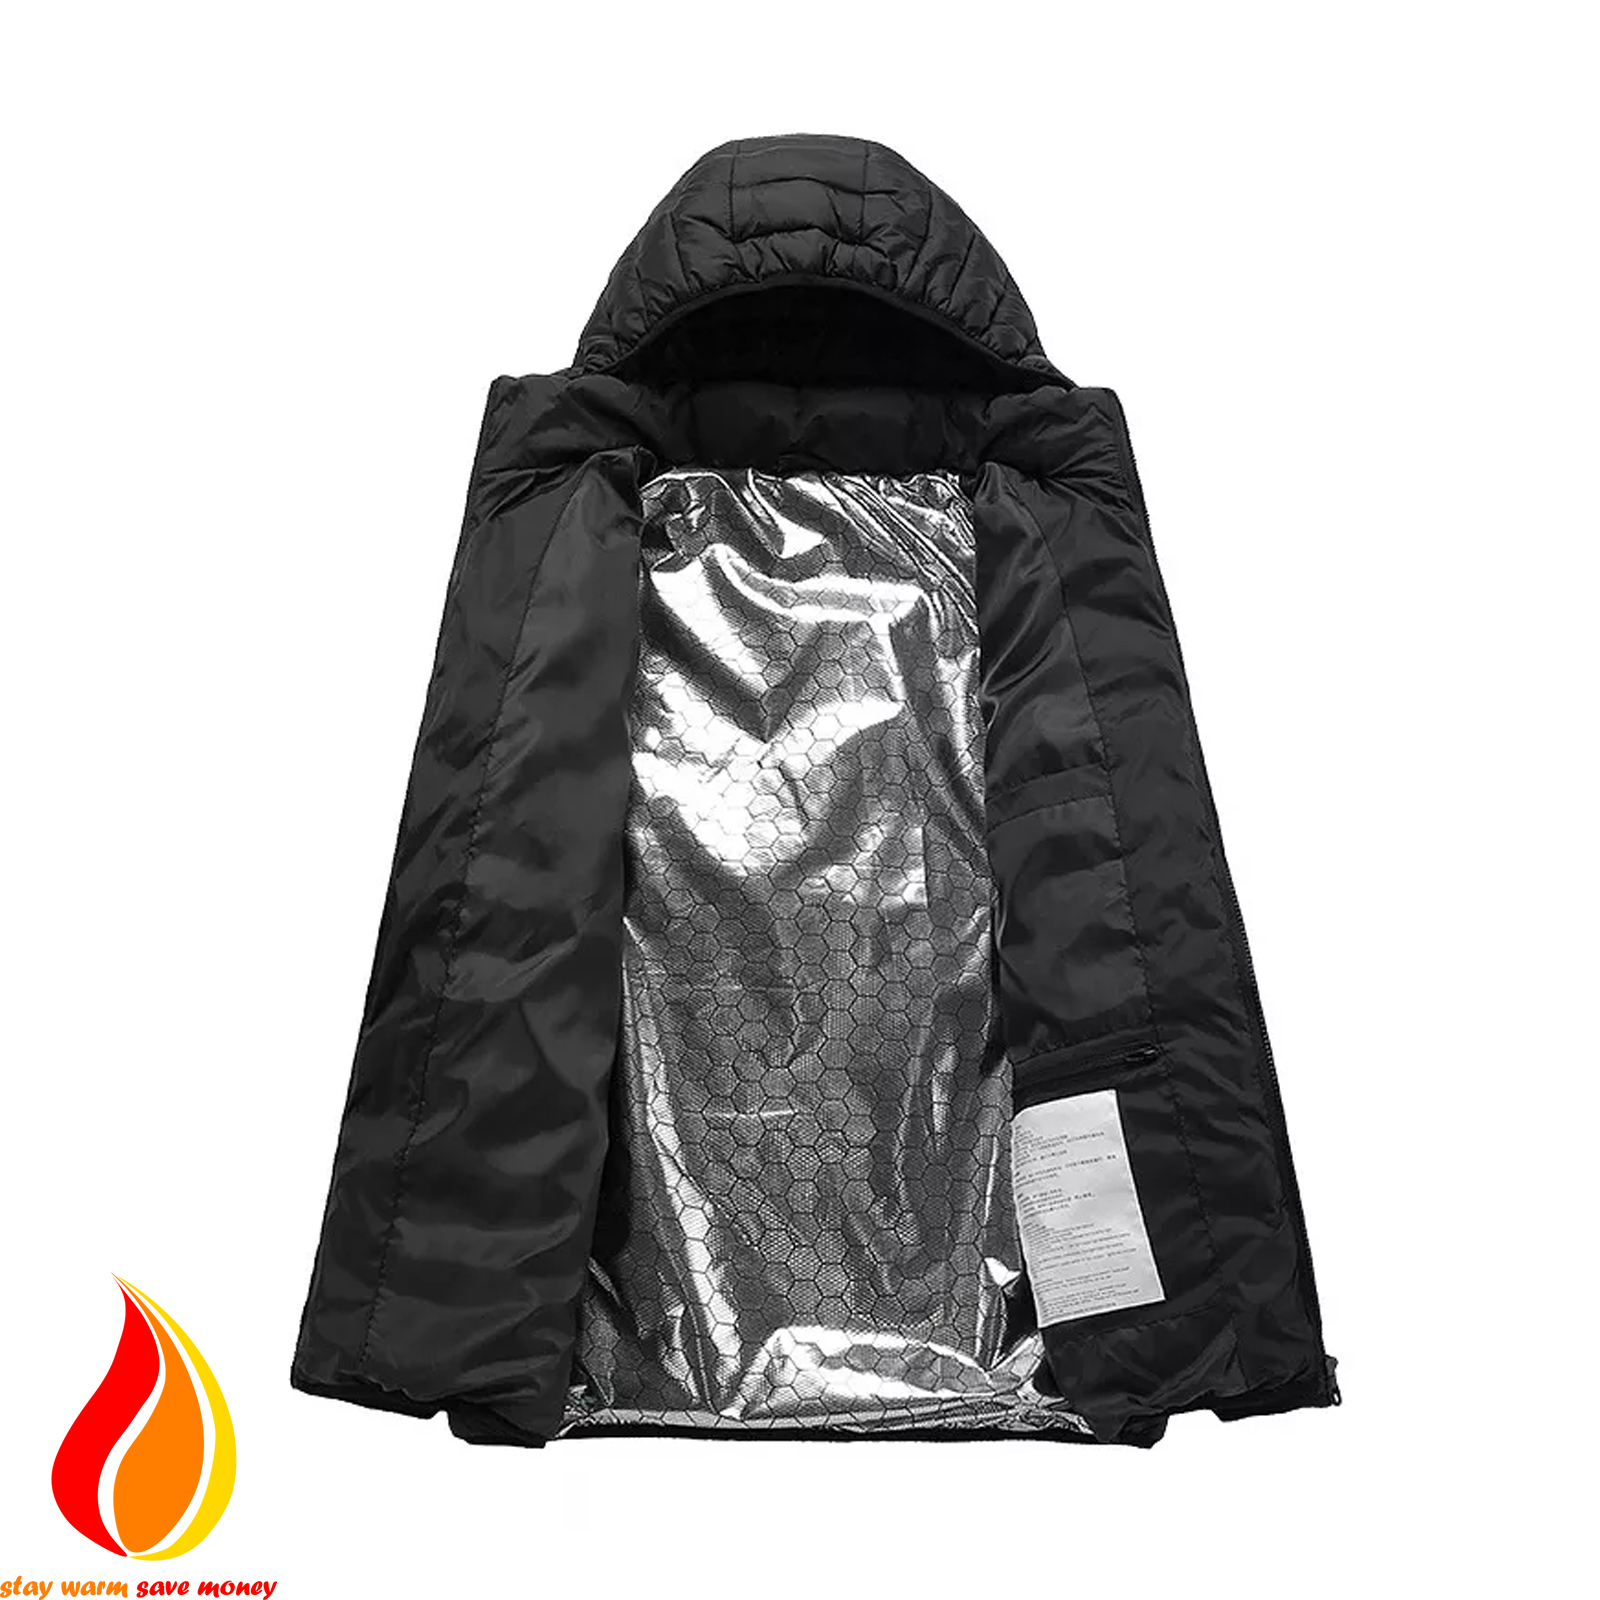 Heated Jacket (including Powerbank) - Stay Warm Save Money